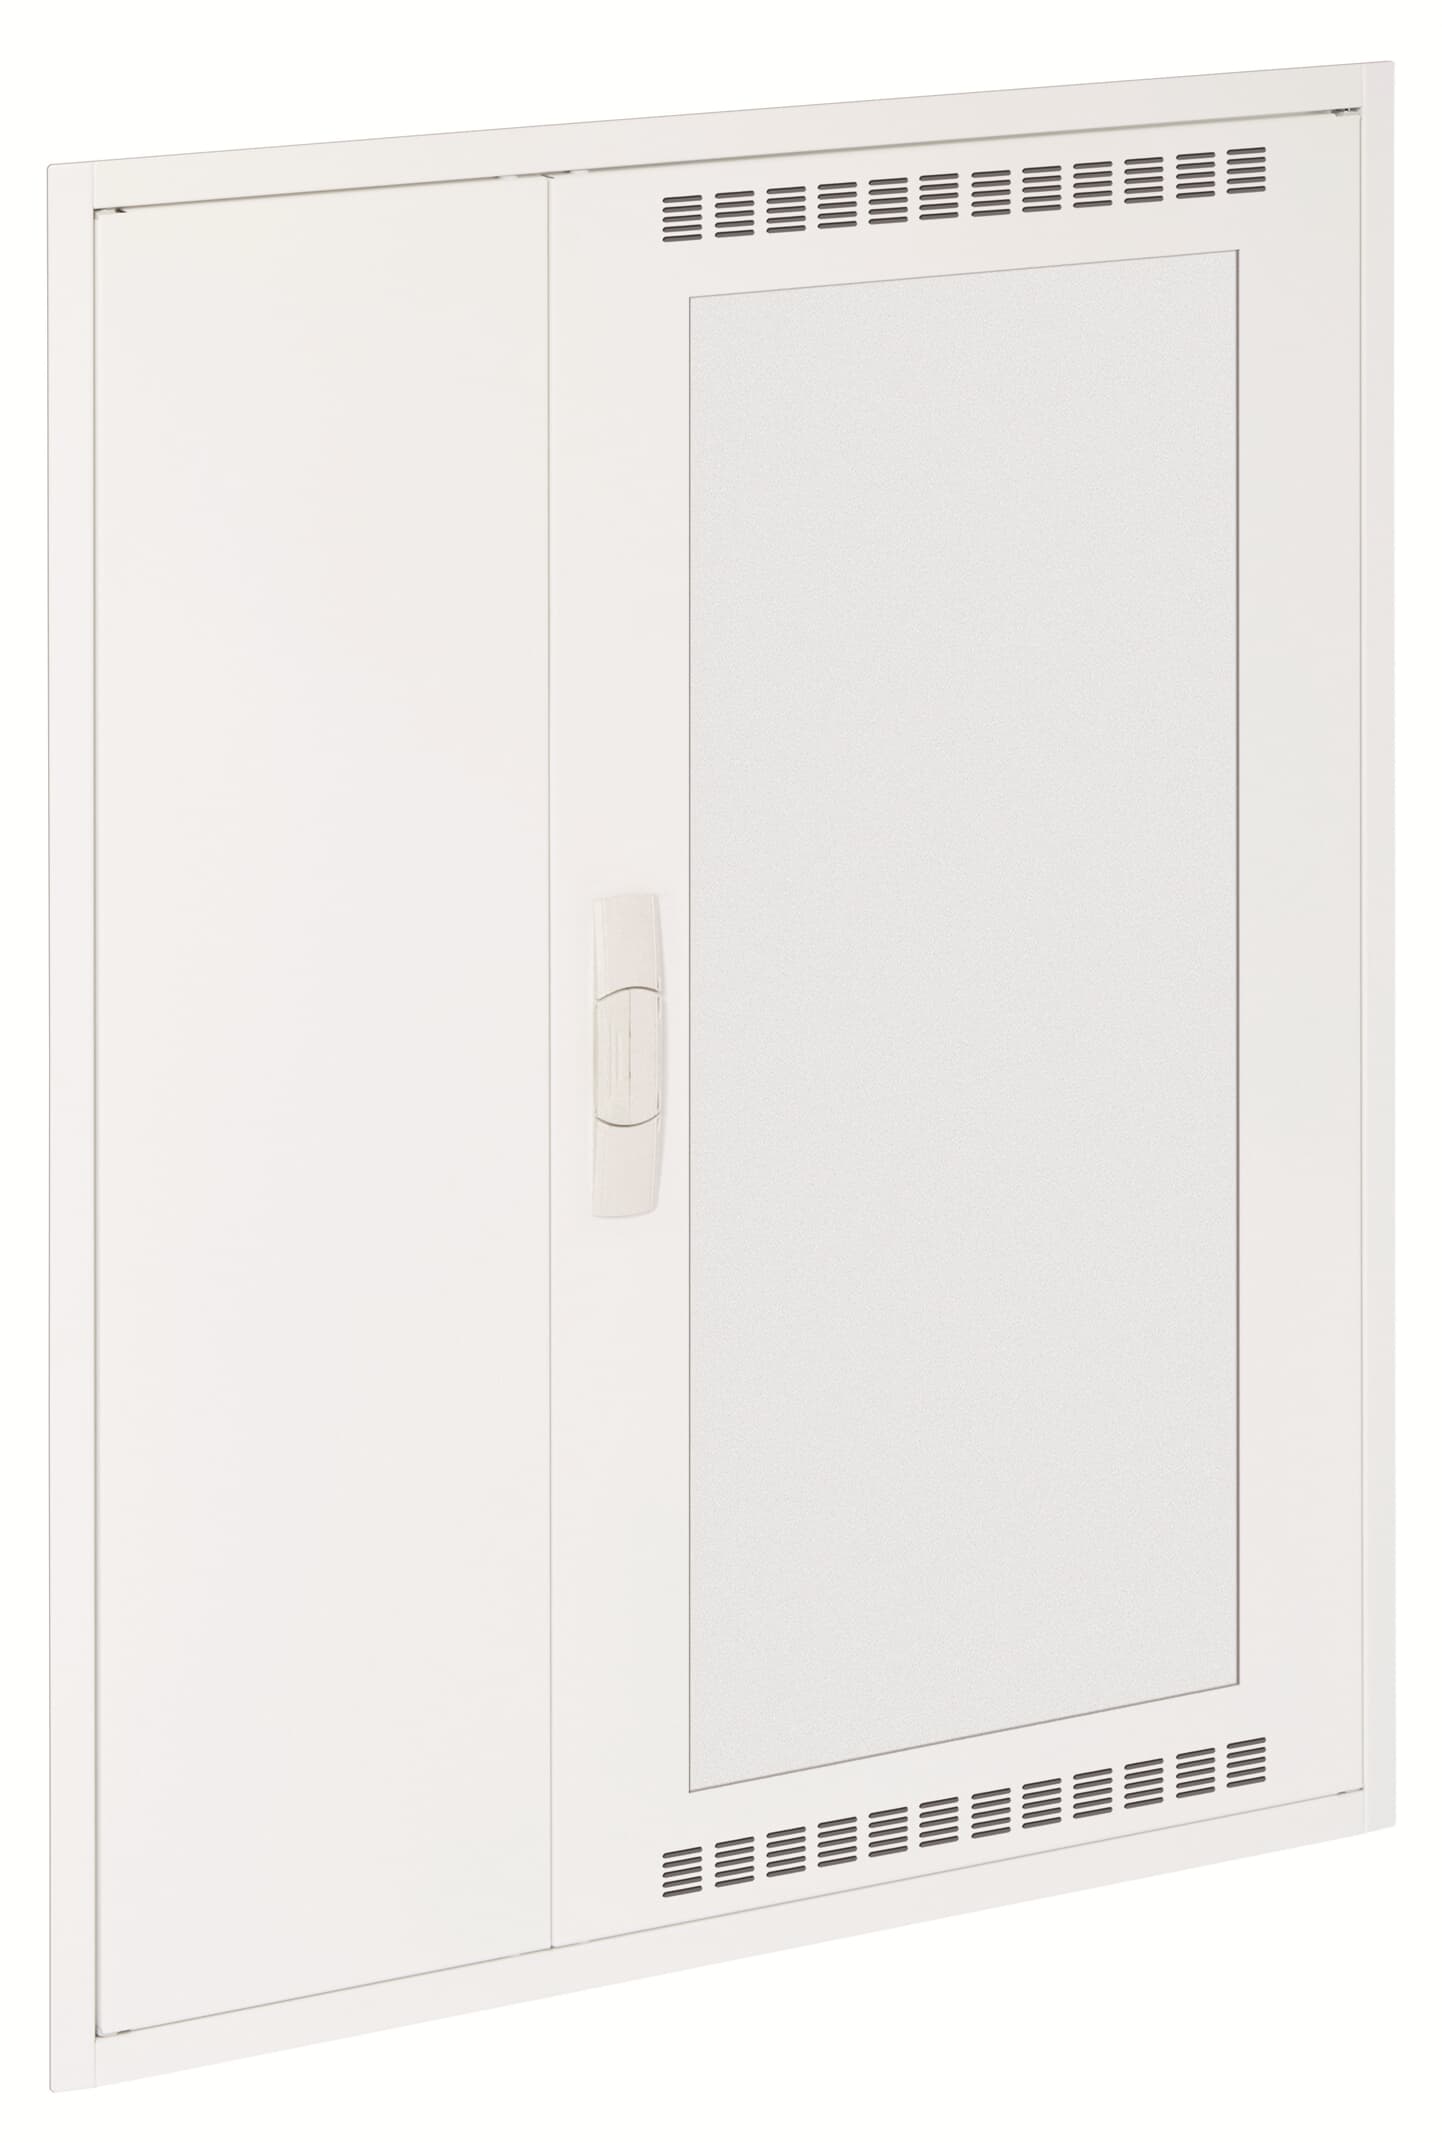 

ABB STJ Рама с WI-FI дверью с вентиляционными отверстиями ширина 3, высота 6 для шкафа U63, Белый, STJ